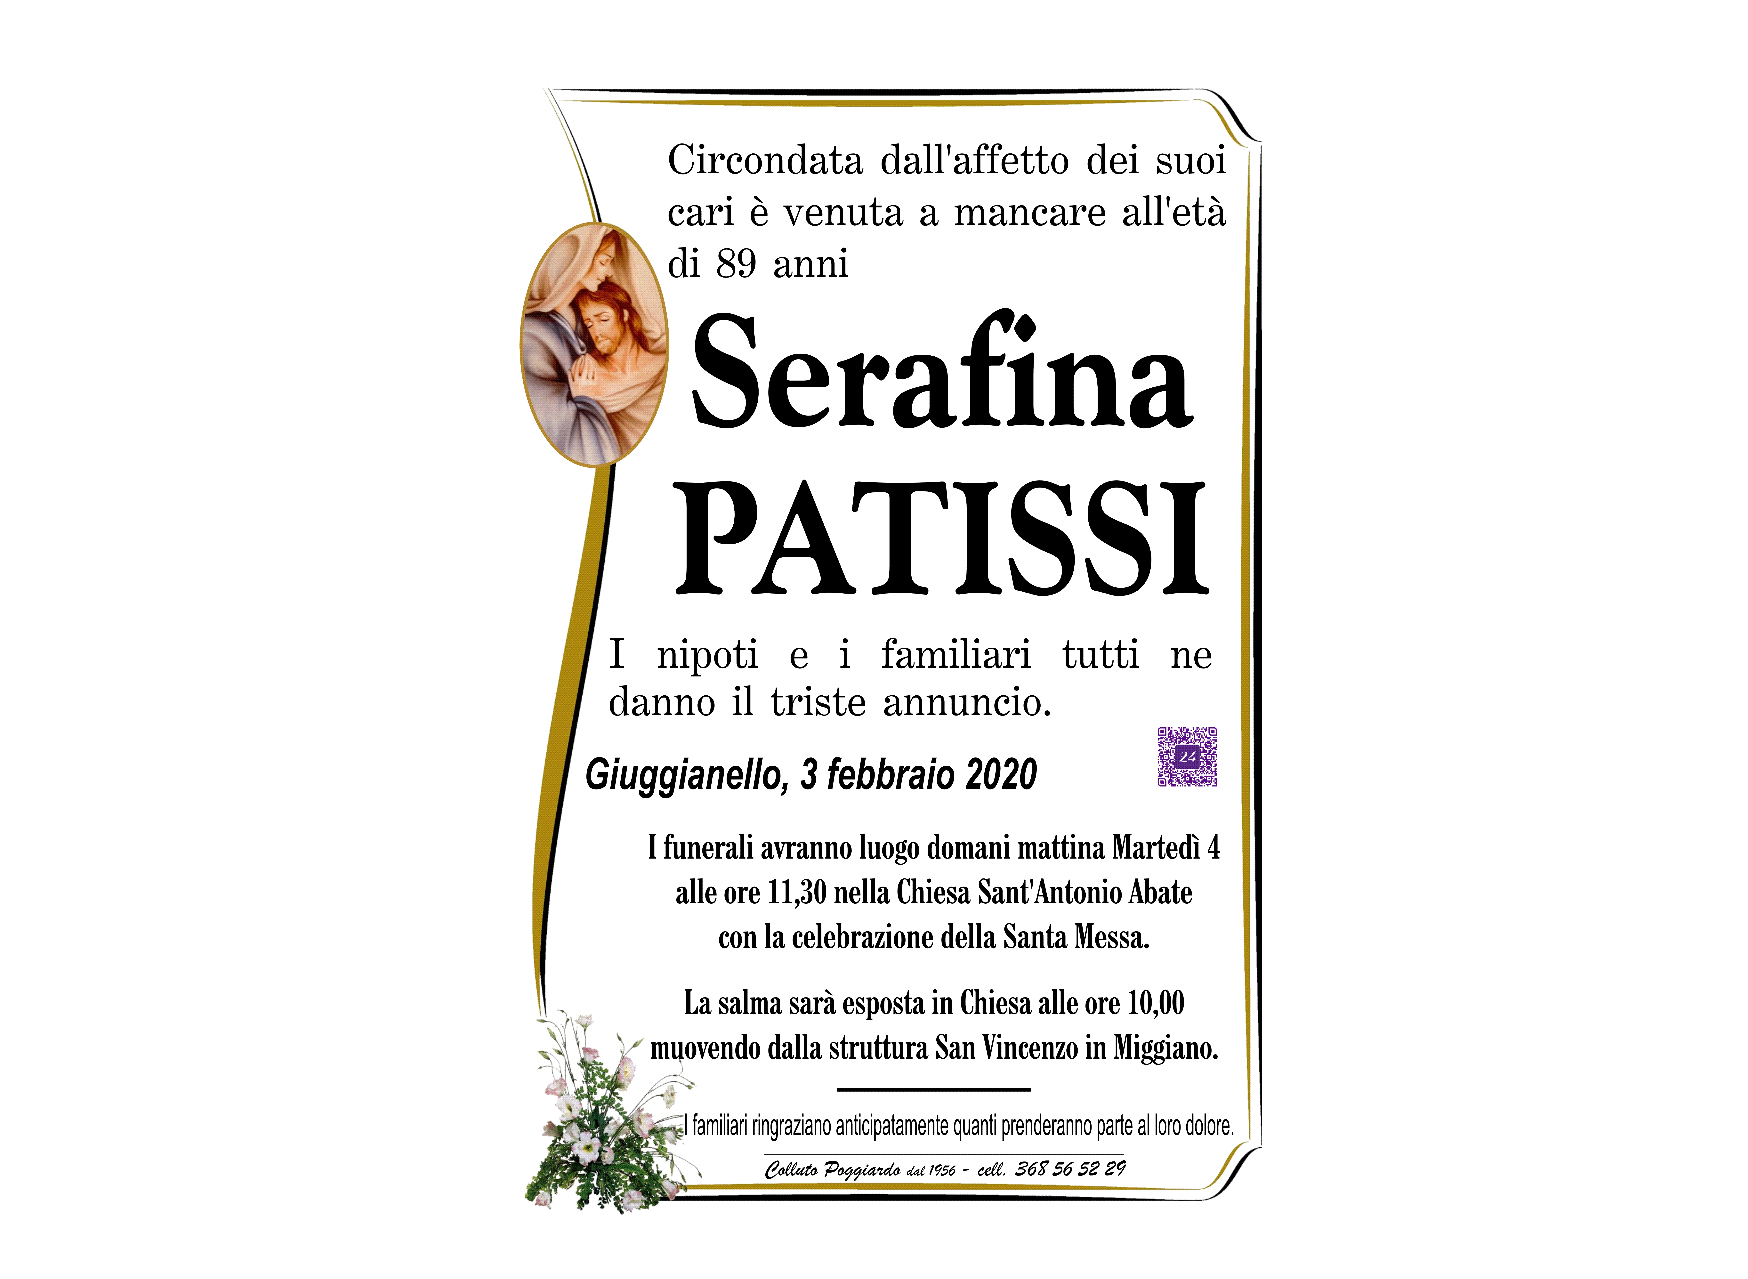 Serafina Patissi